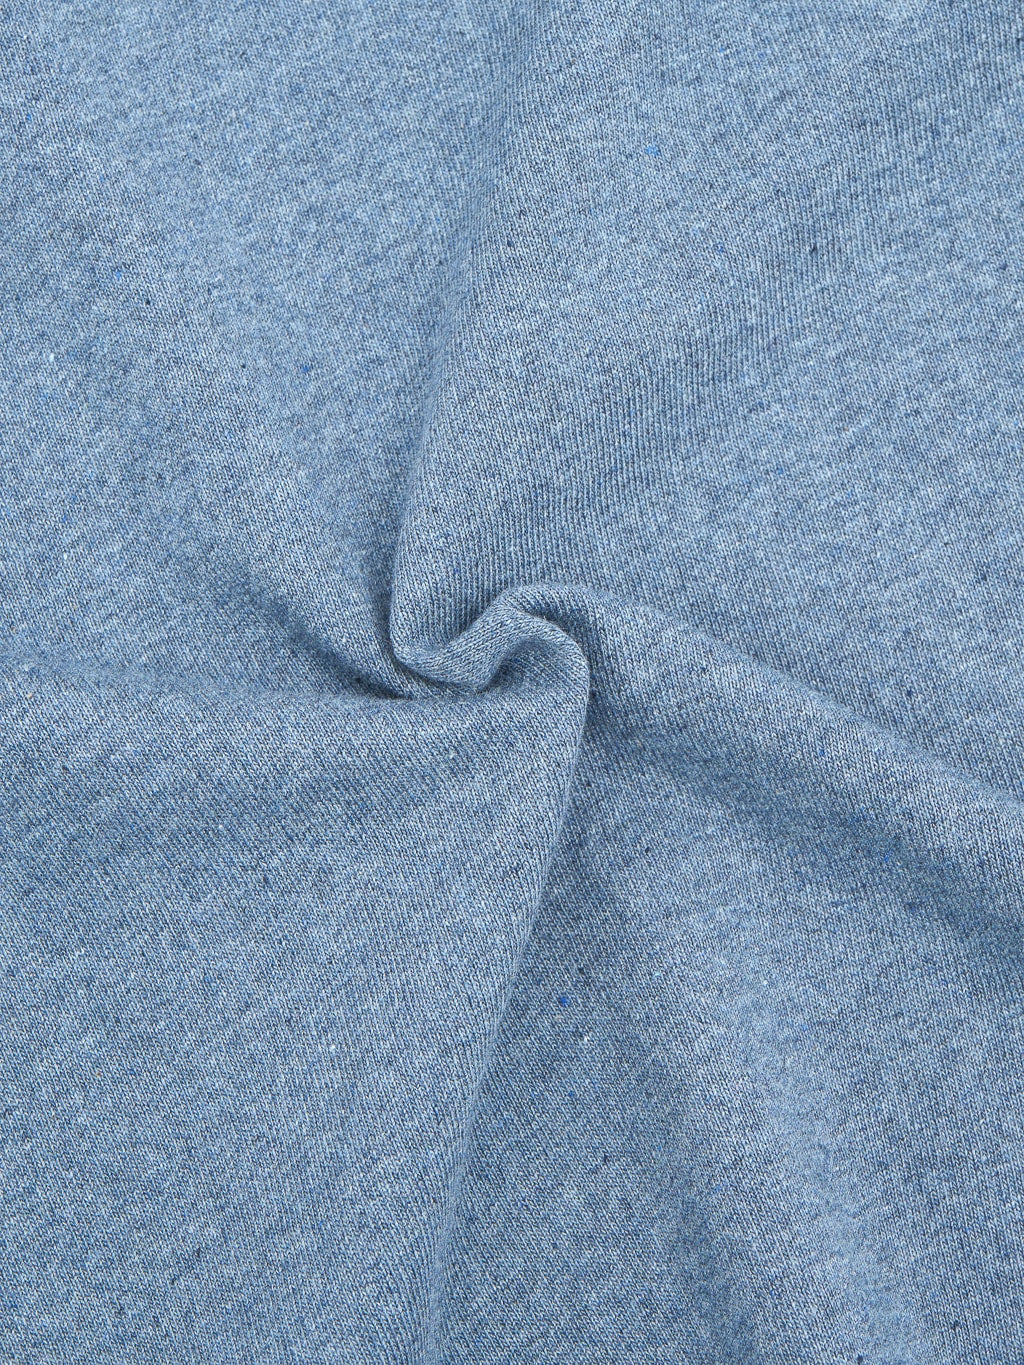 Japan Blue Recycled Denim Tshirt mid Indigo texture